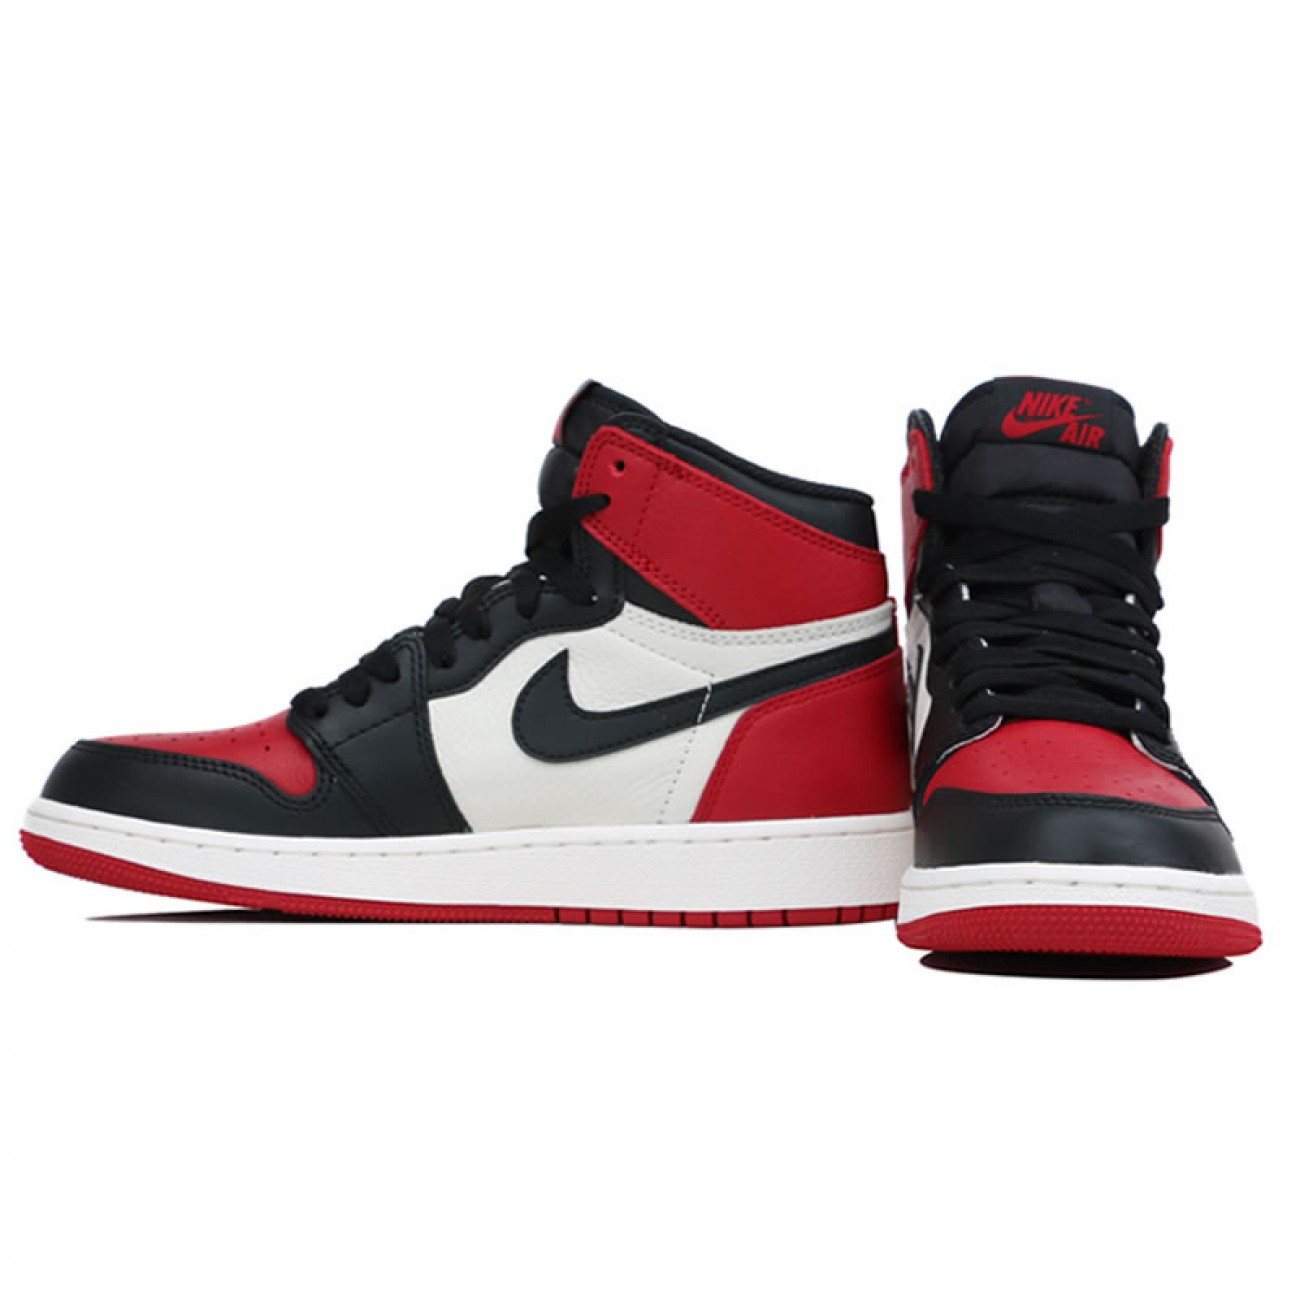 Air Jordan 1 "Bred Toe" Womens GS "Red and Black Jordans" Shoes 575441-610